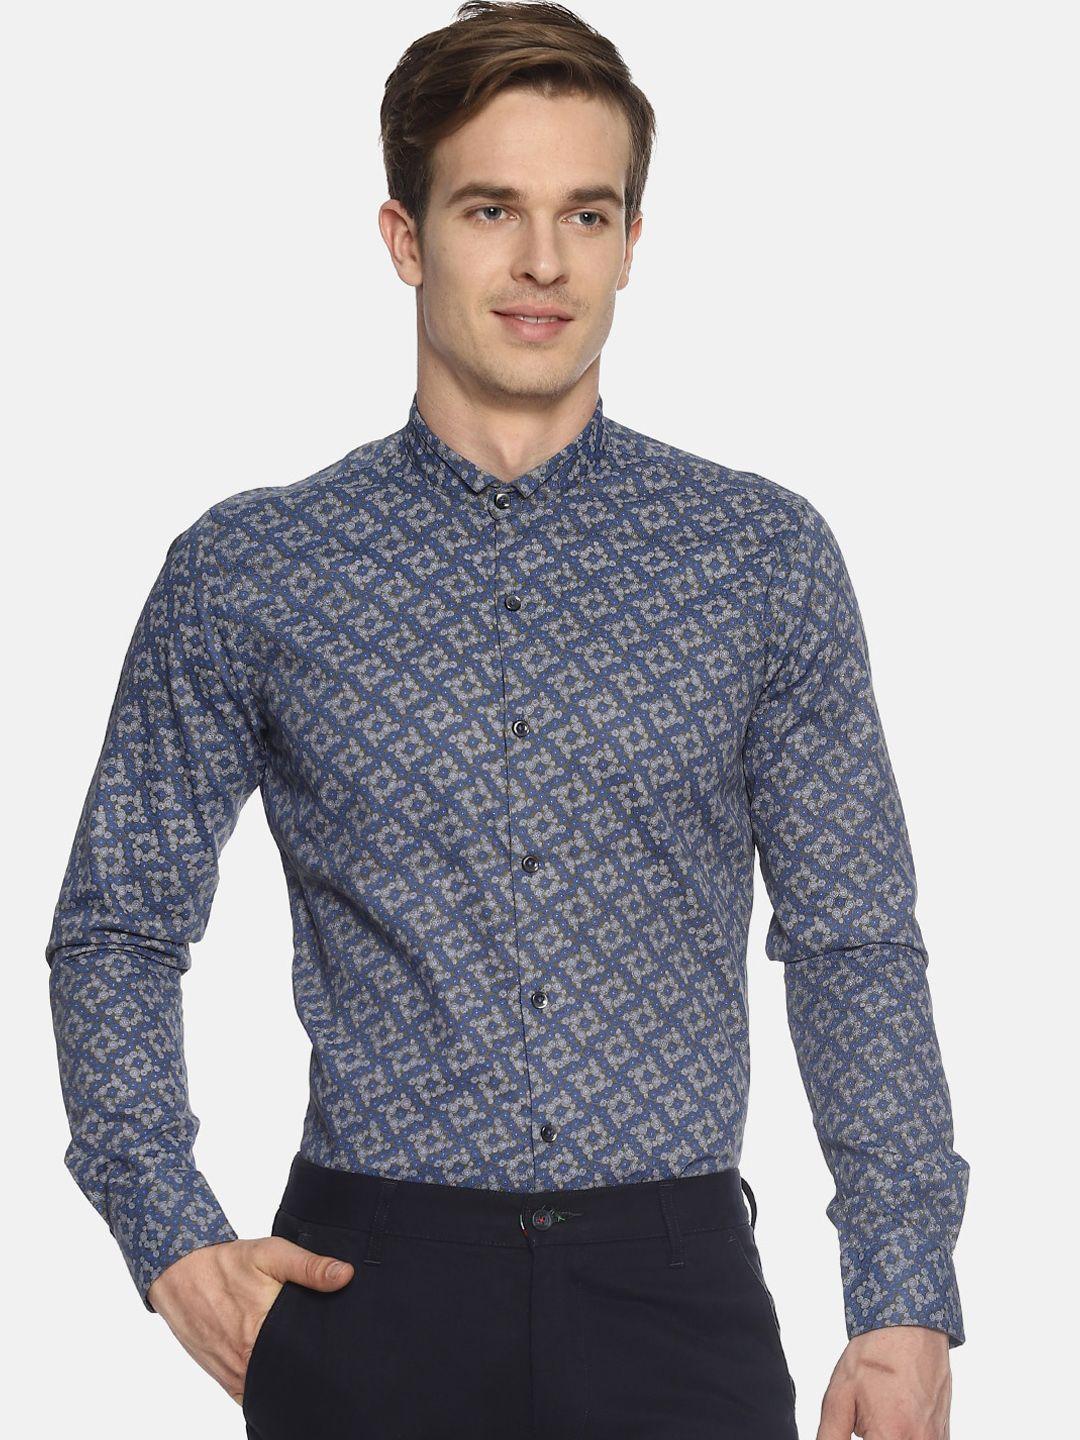 couper-&-coll-men-blue-printed-casual-shirt